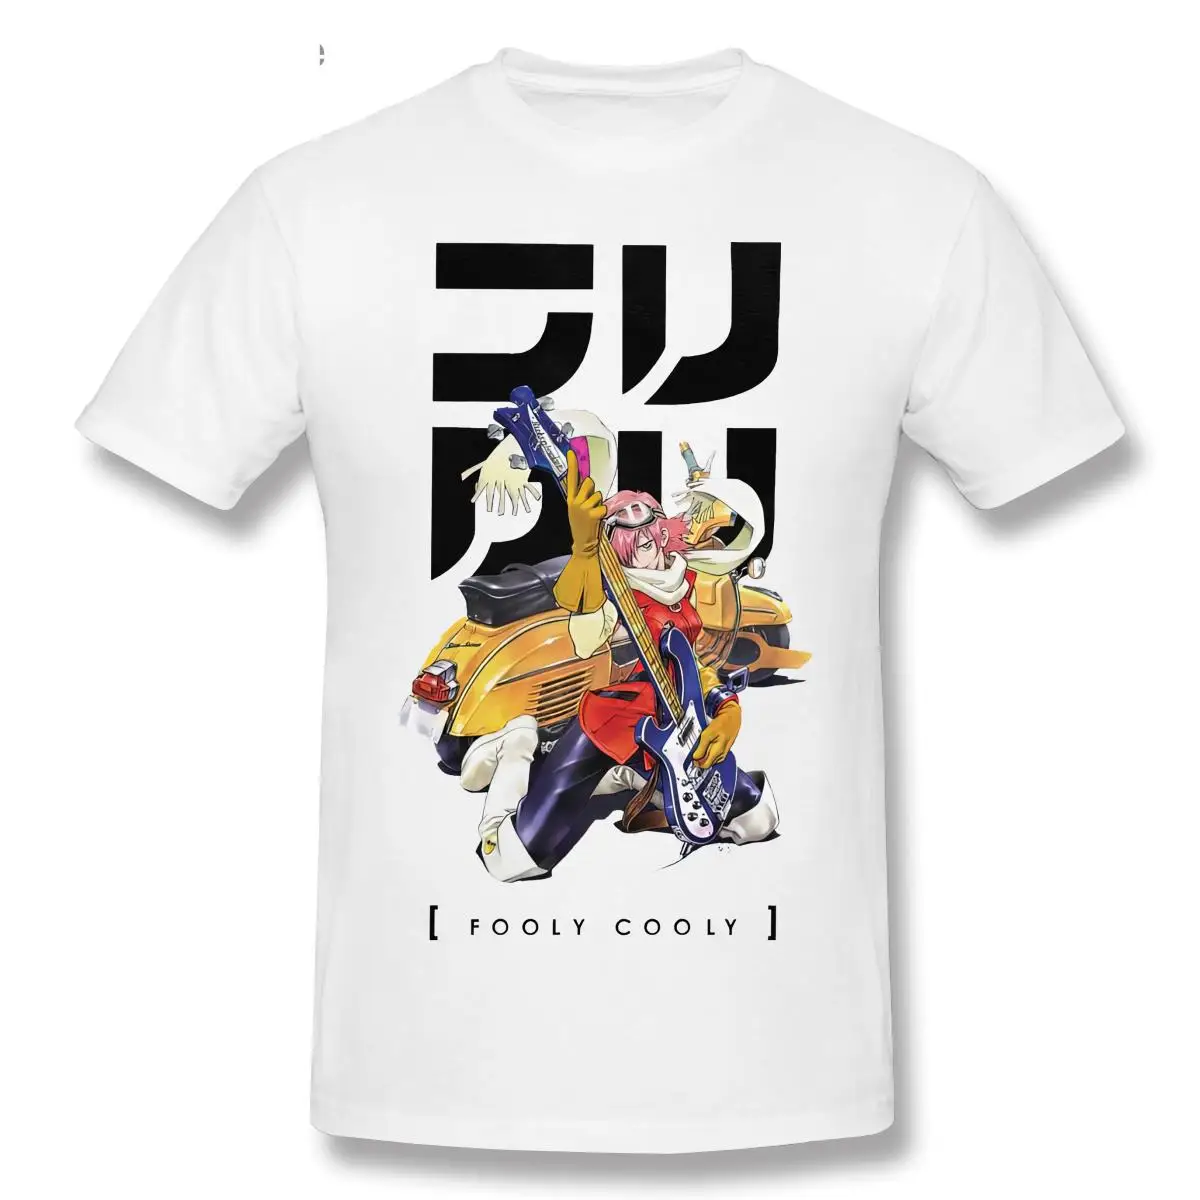 

Classic Male Fooly Cooly Haruko T-Shirt Short-Sleeve Crewneck Cotton Tshirt Casual Japan Anime Manga FLCL Tee Shirt Apparel Gift